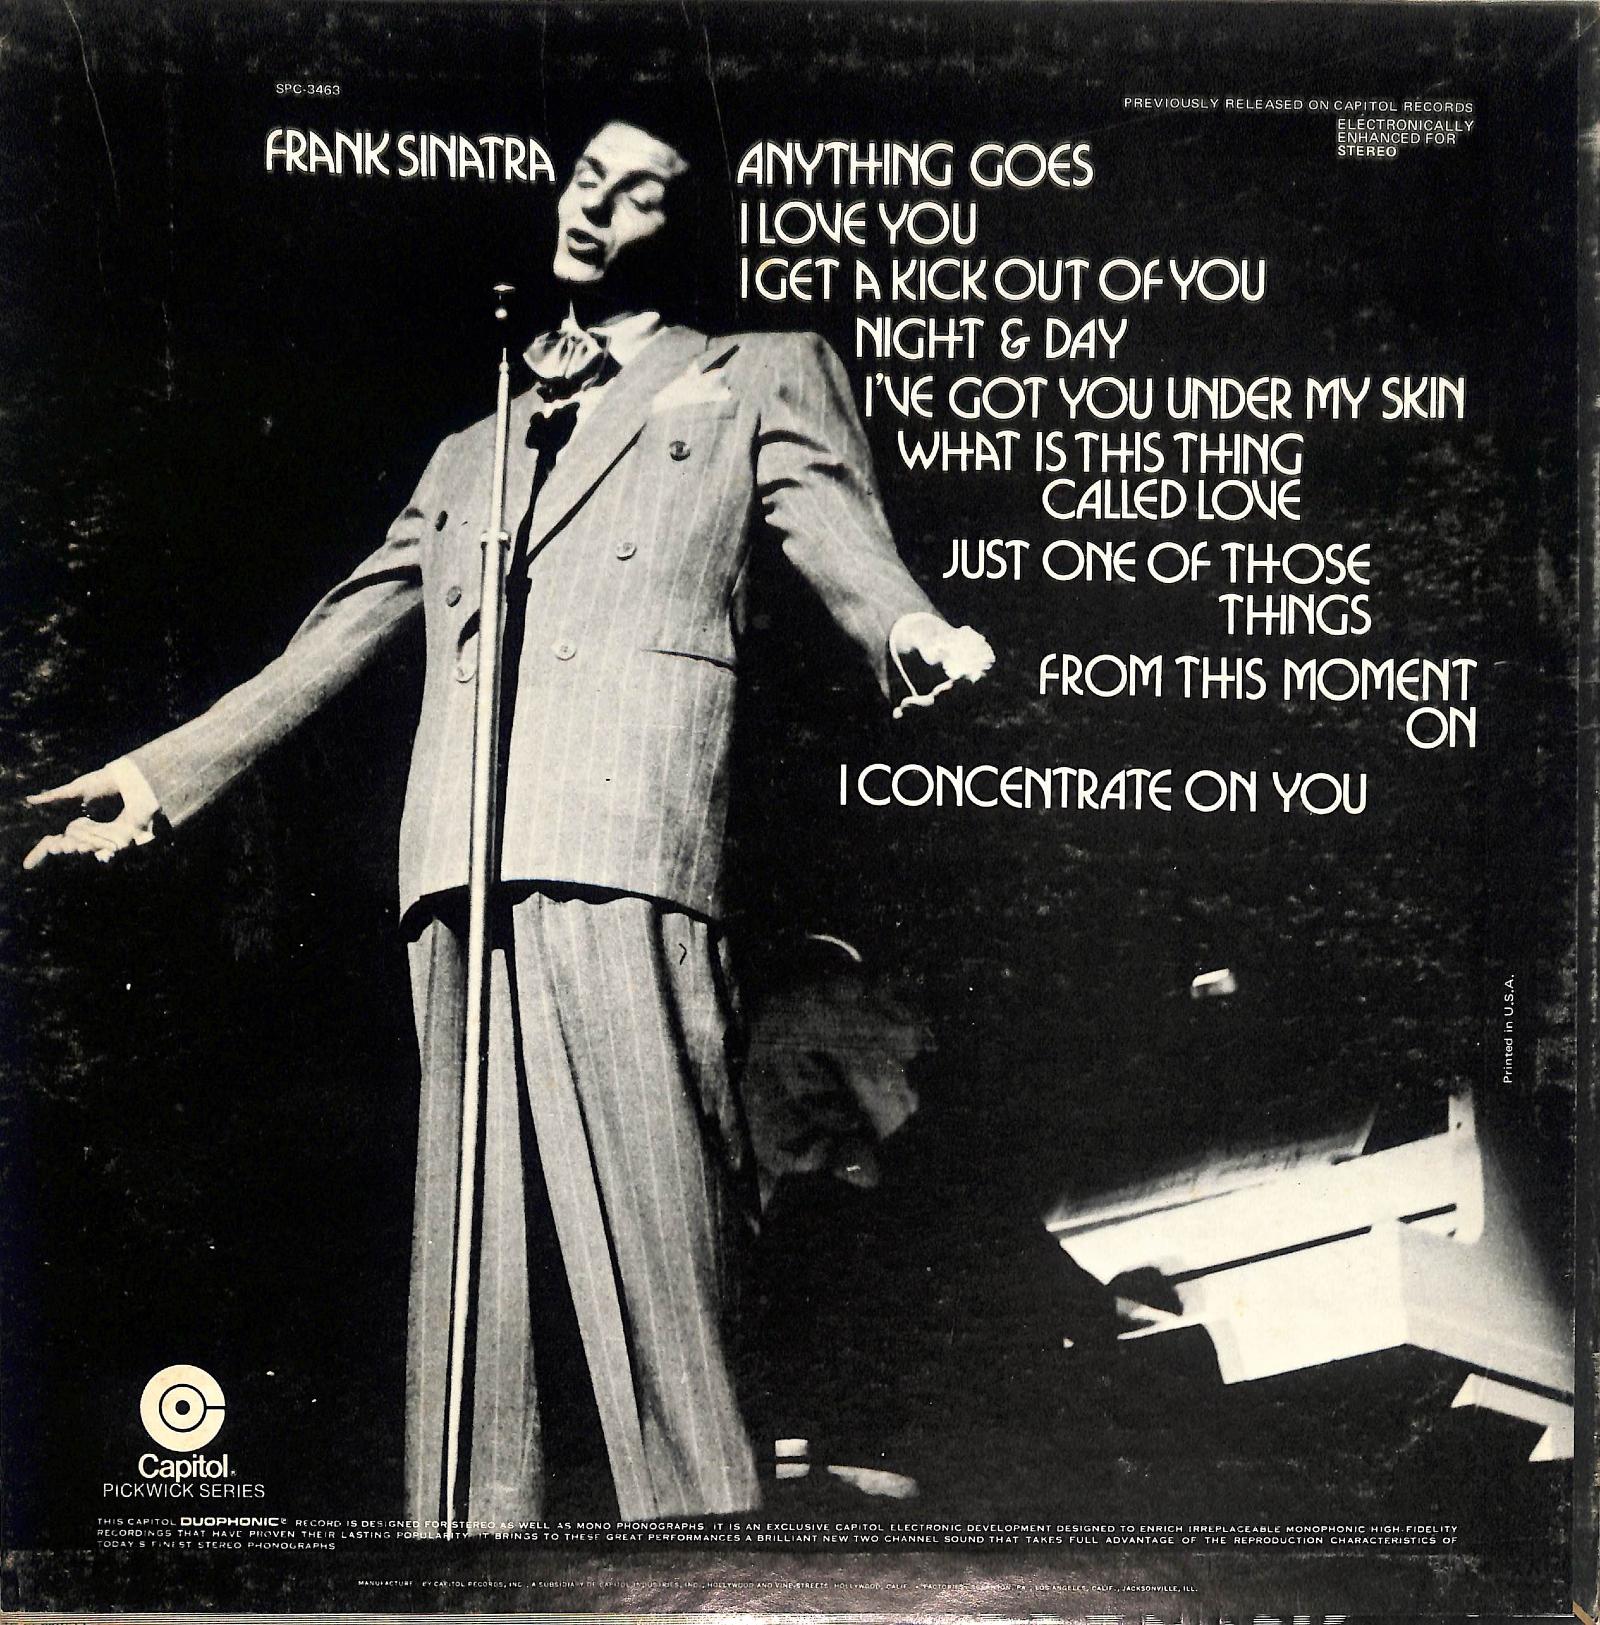 FRANK SINATRA - My Cole Porter